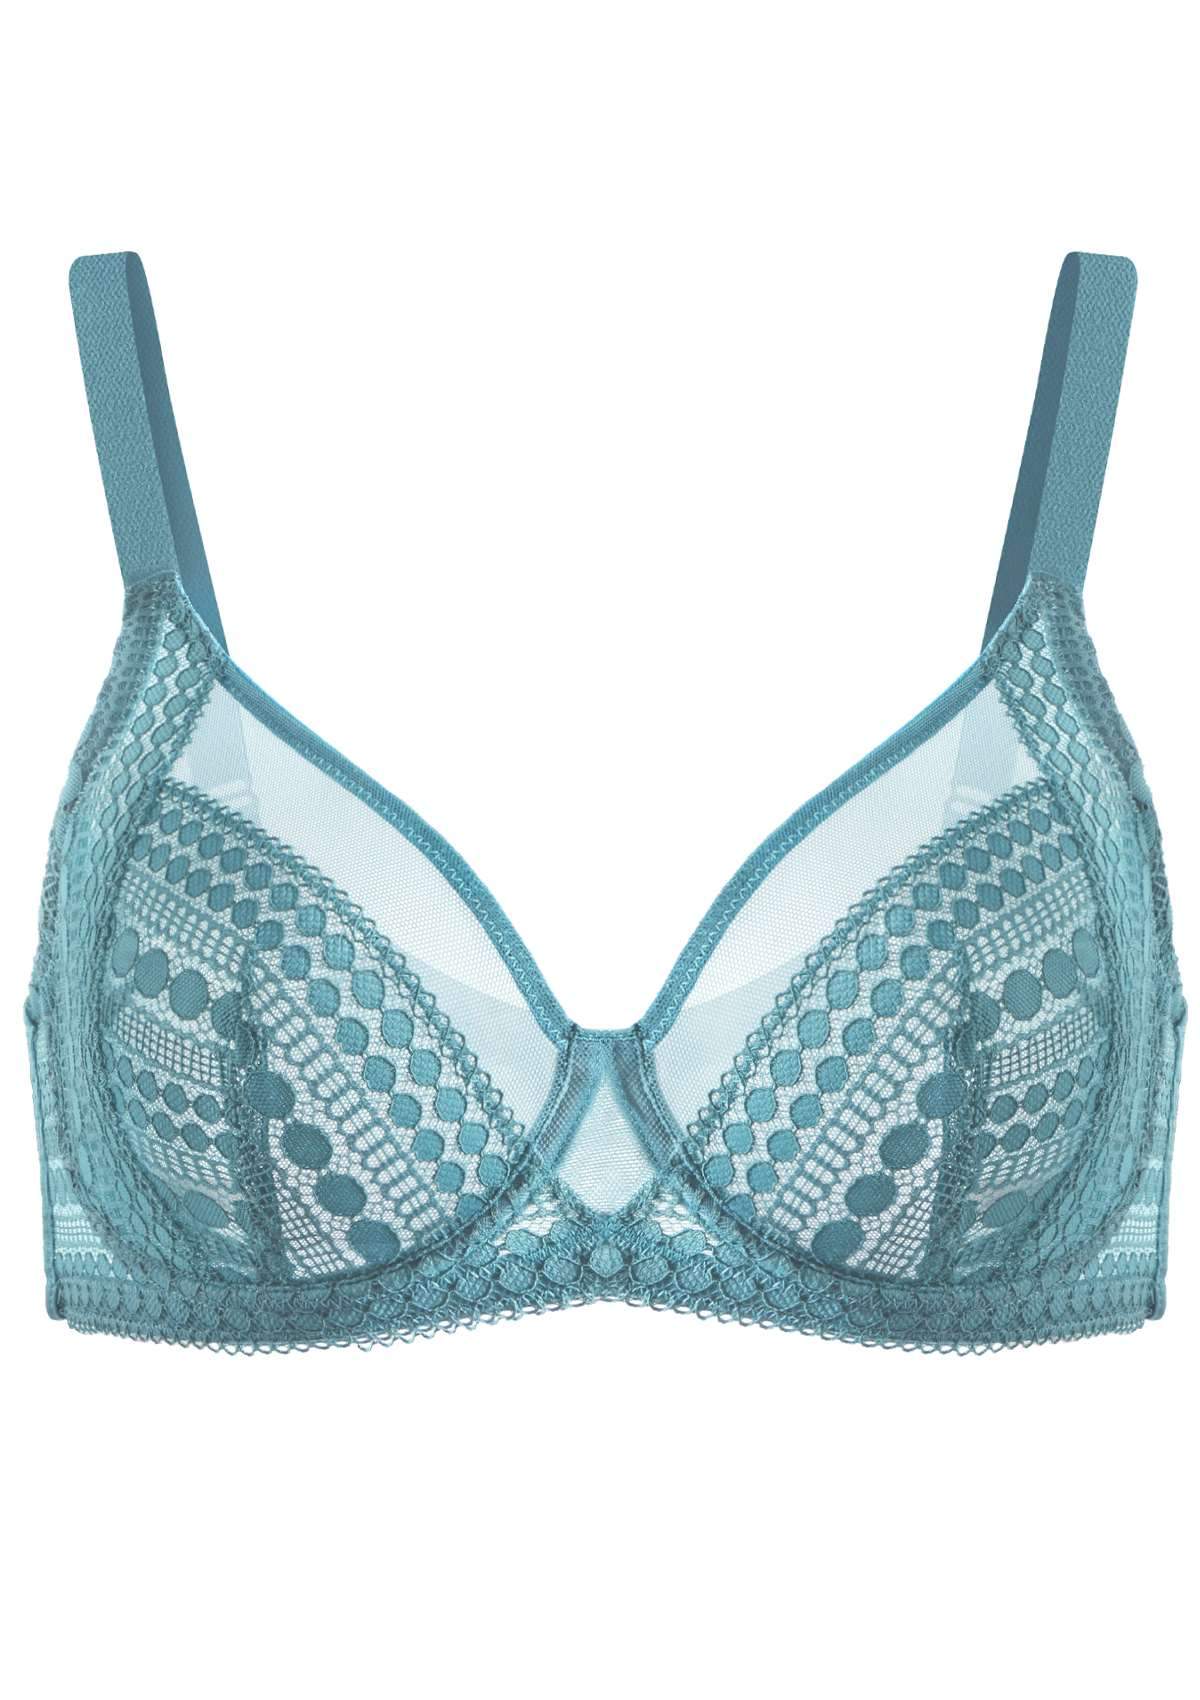 HSIA Heroine Matching Bra And Underwear Set: Bra For Big Boobs - Brittany Blue / 38 / DDD/F